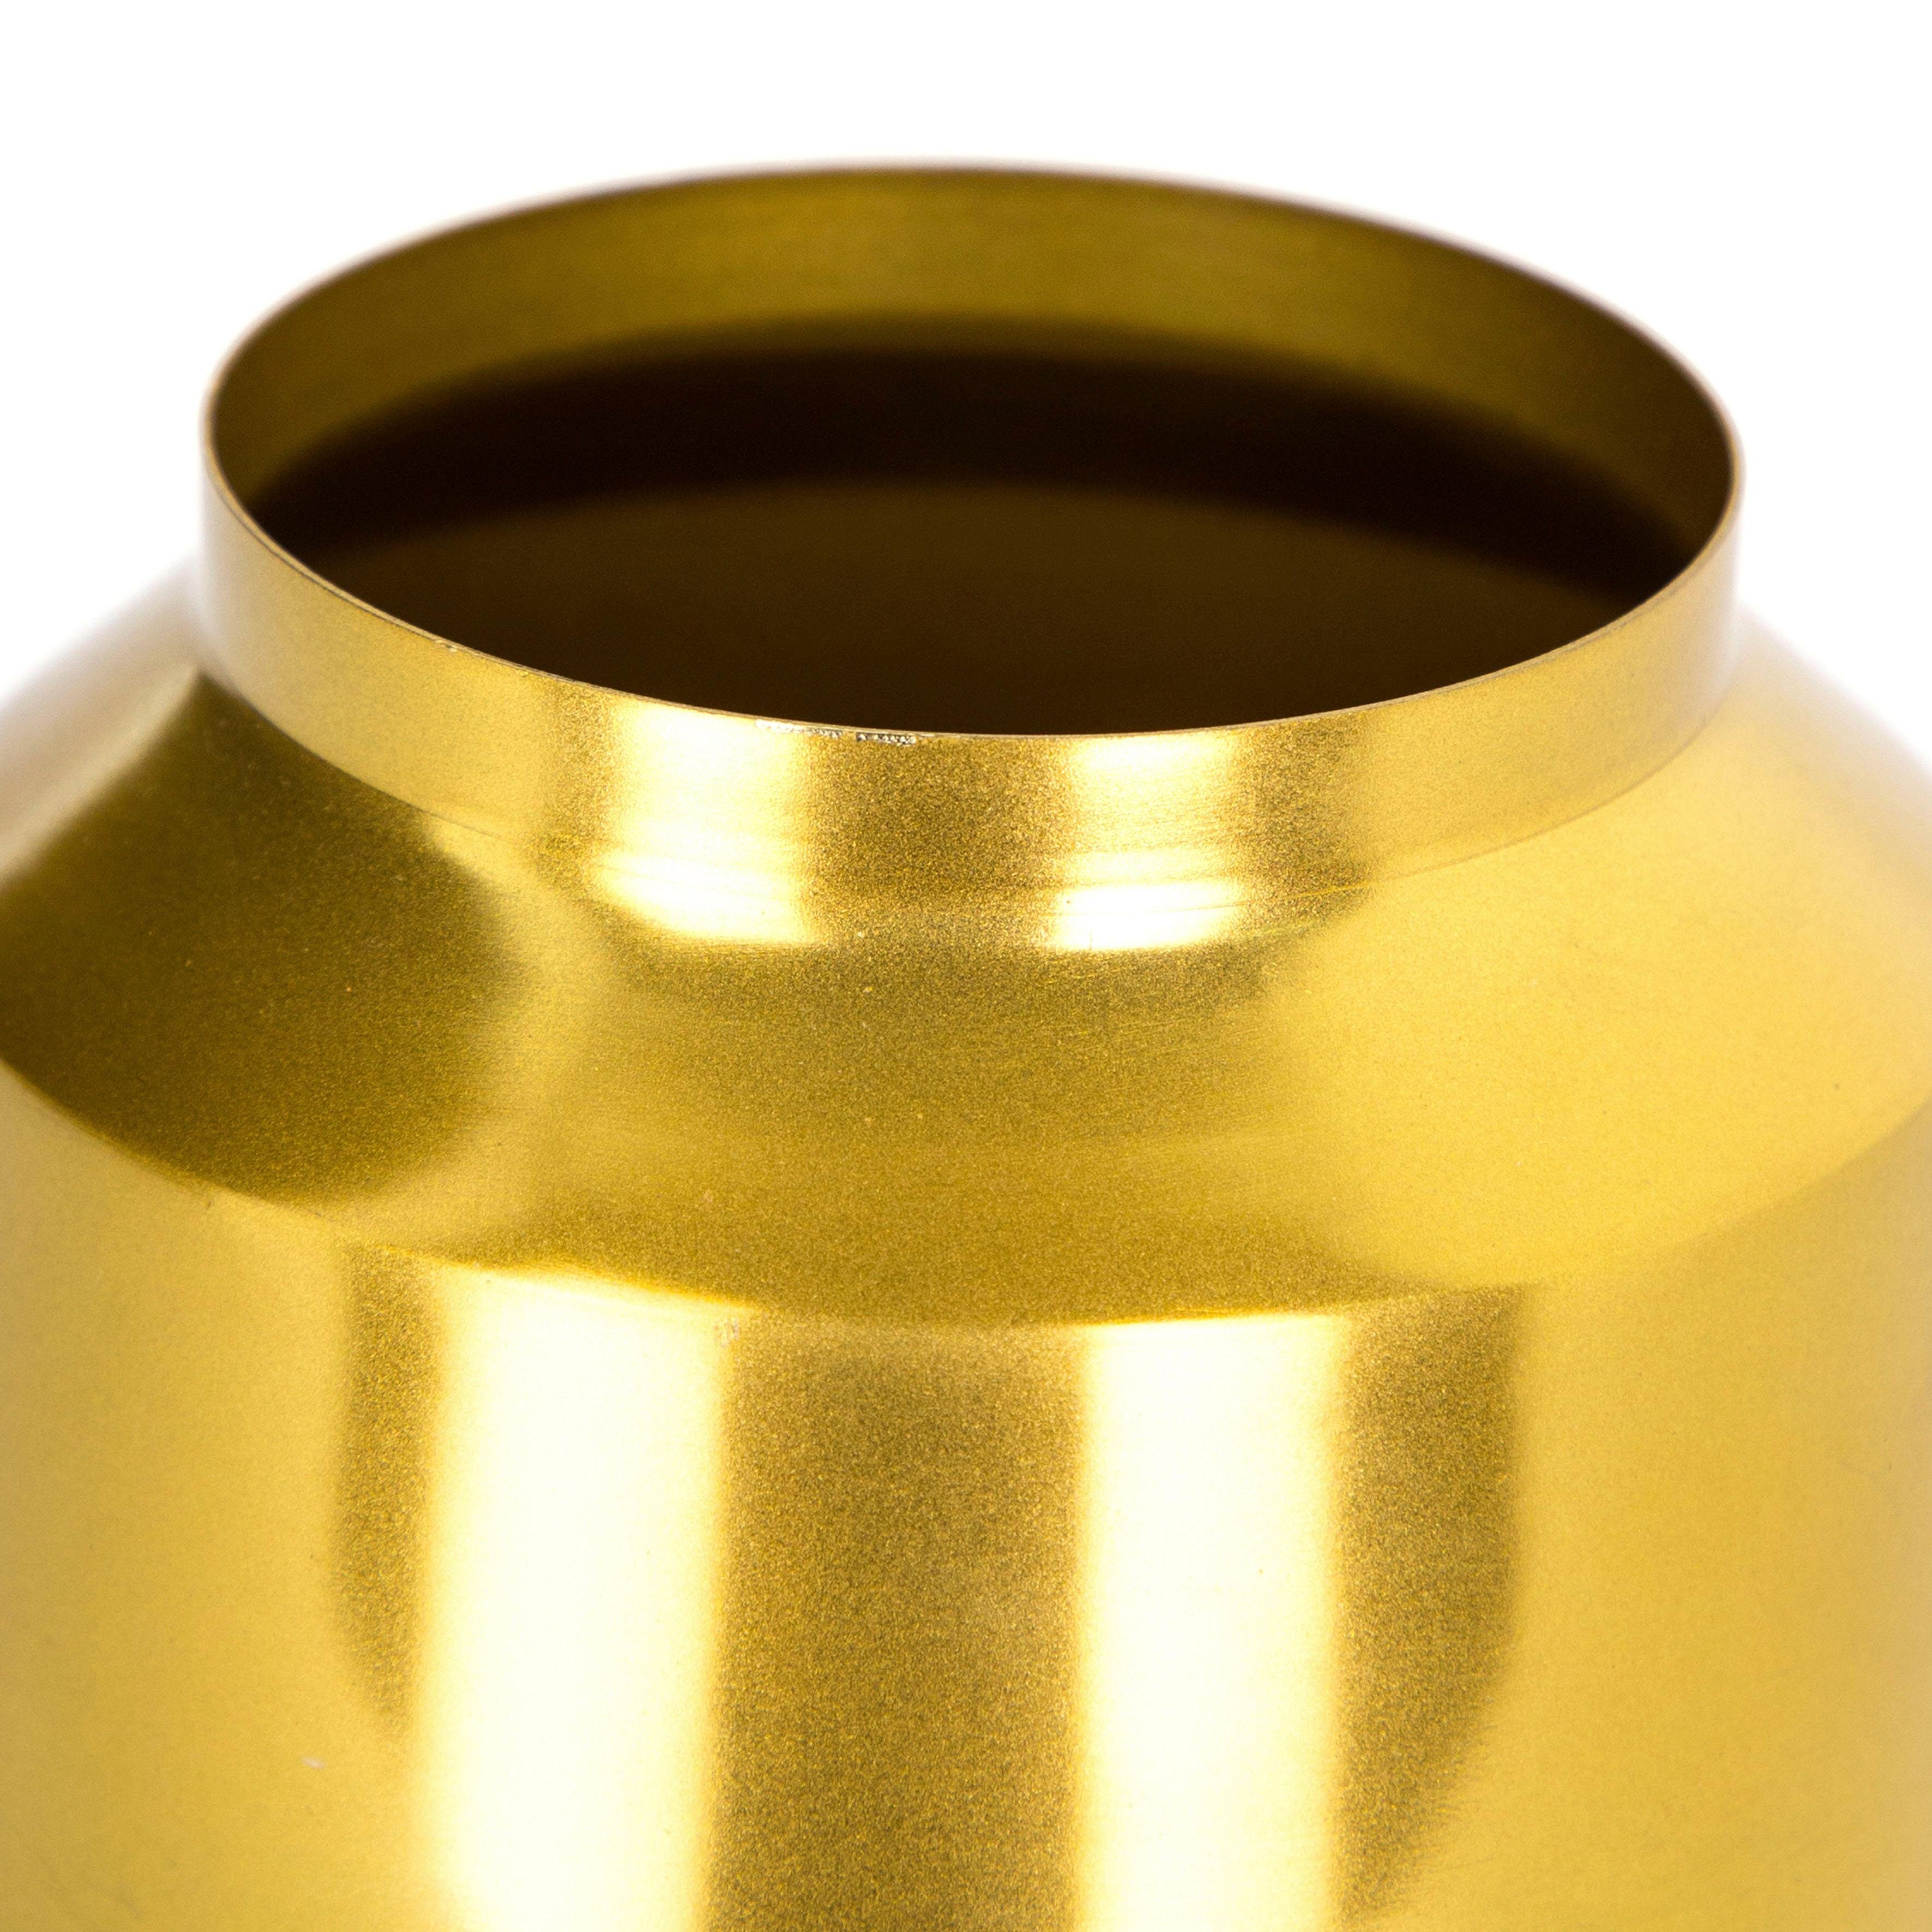 (Set, Culture Dekovase Verarbeitung Kayoom 3 St), hochwertige goldfarben-pflaume-hellgrau-petrol